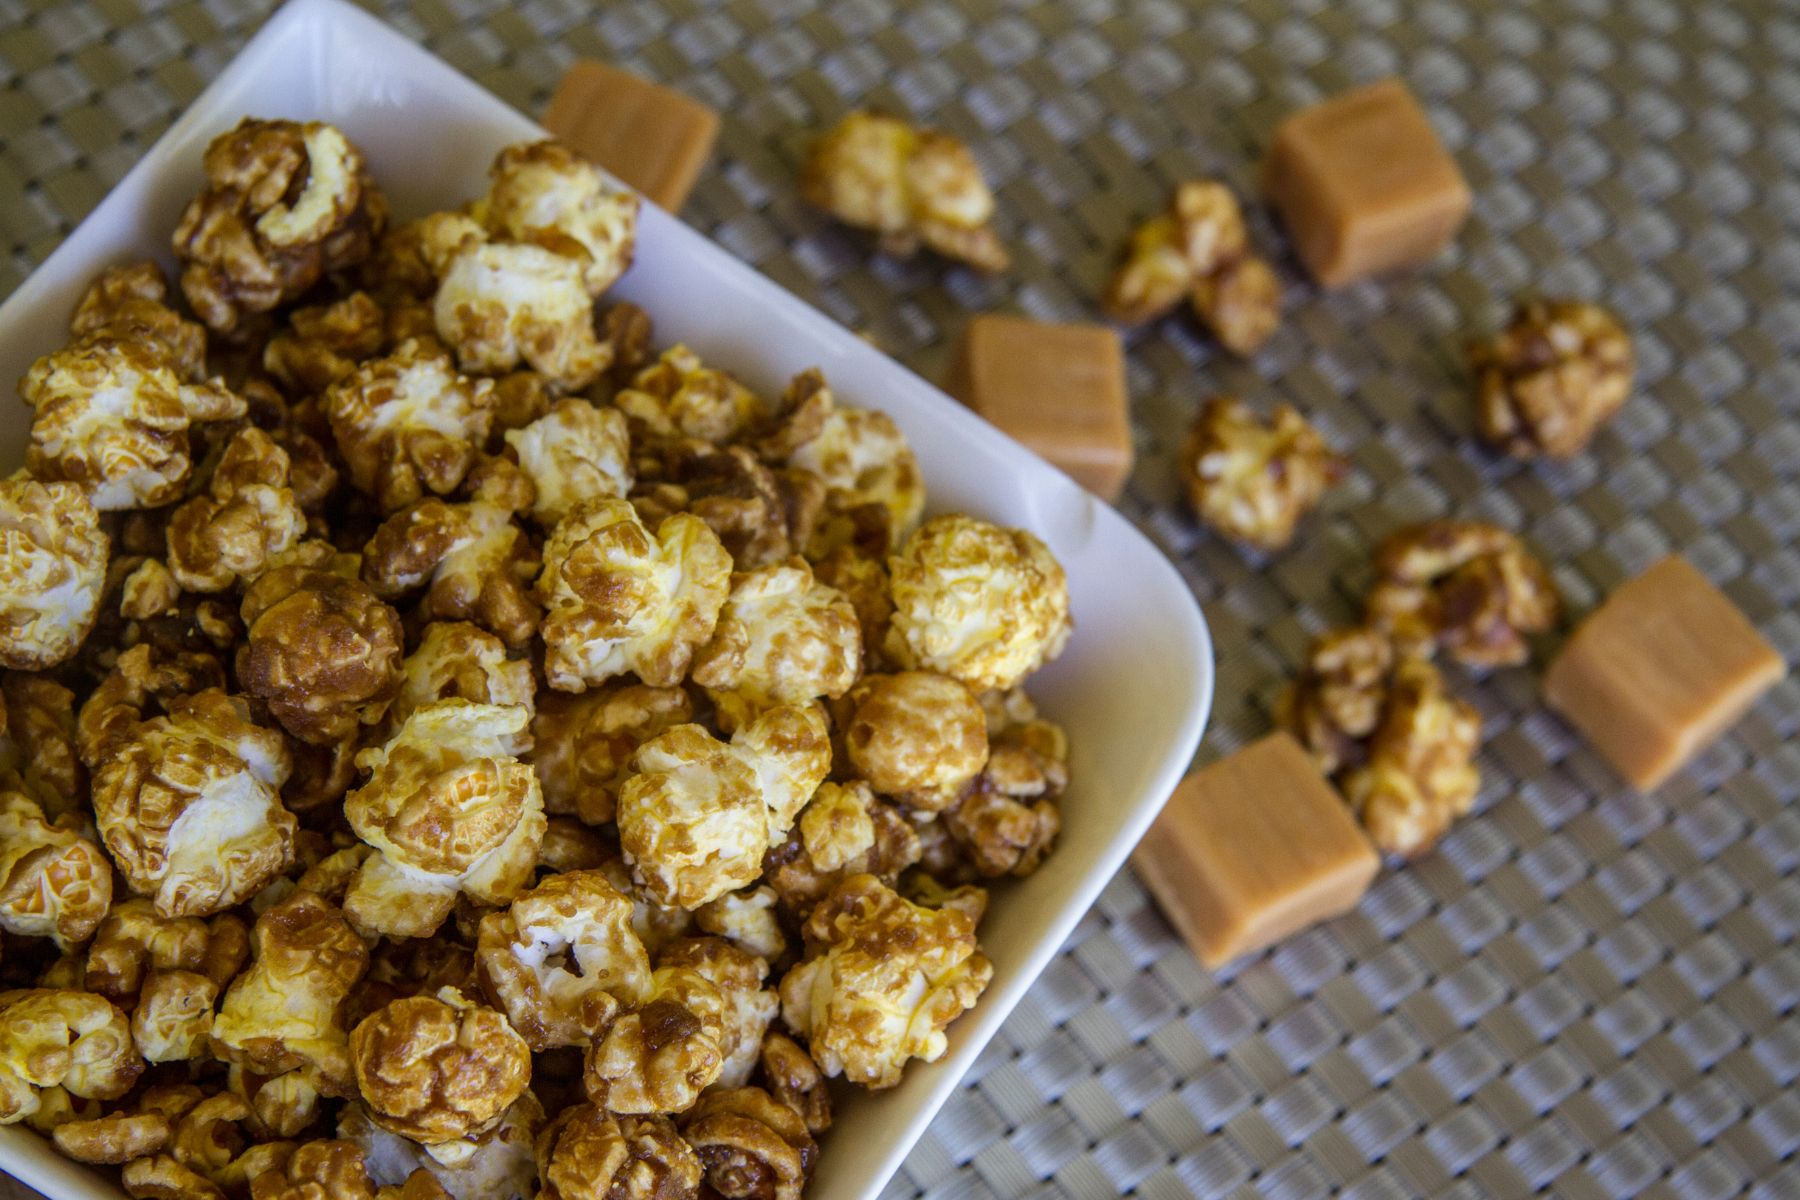 Poppington's Gourmet Popcorn